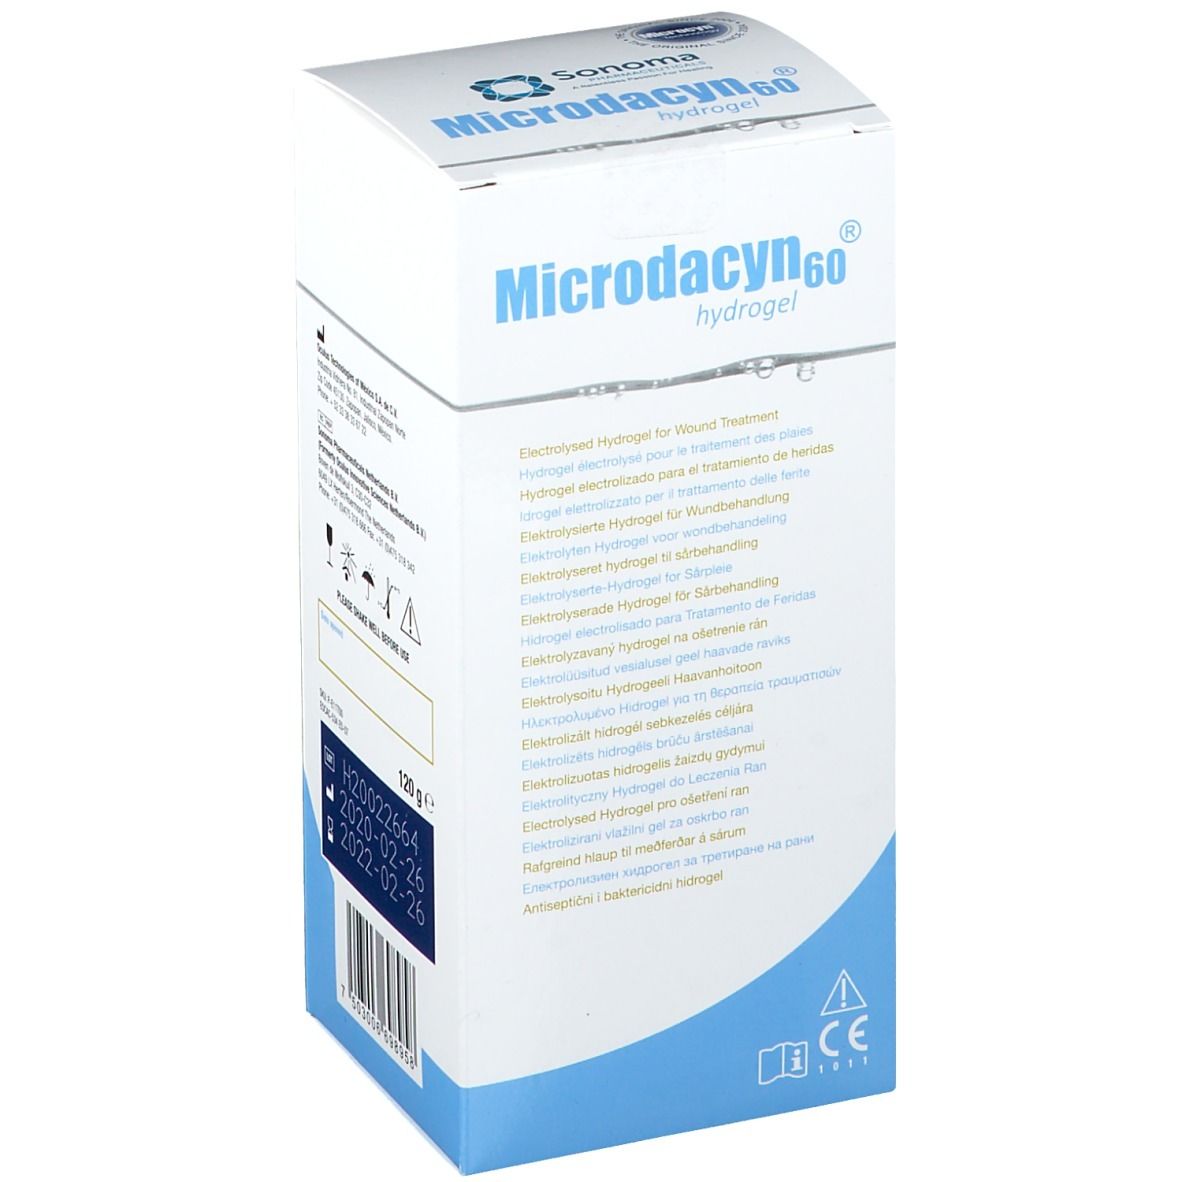 Image of Microdacyn60® Wundpflege-Hydrogel